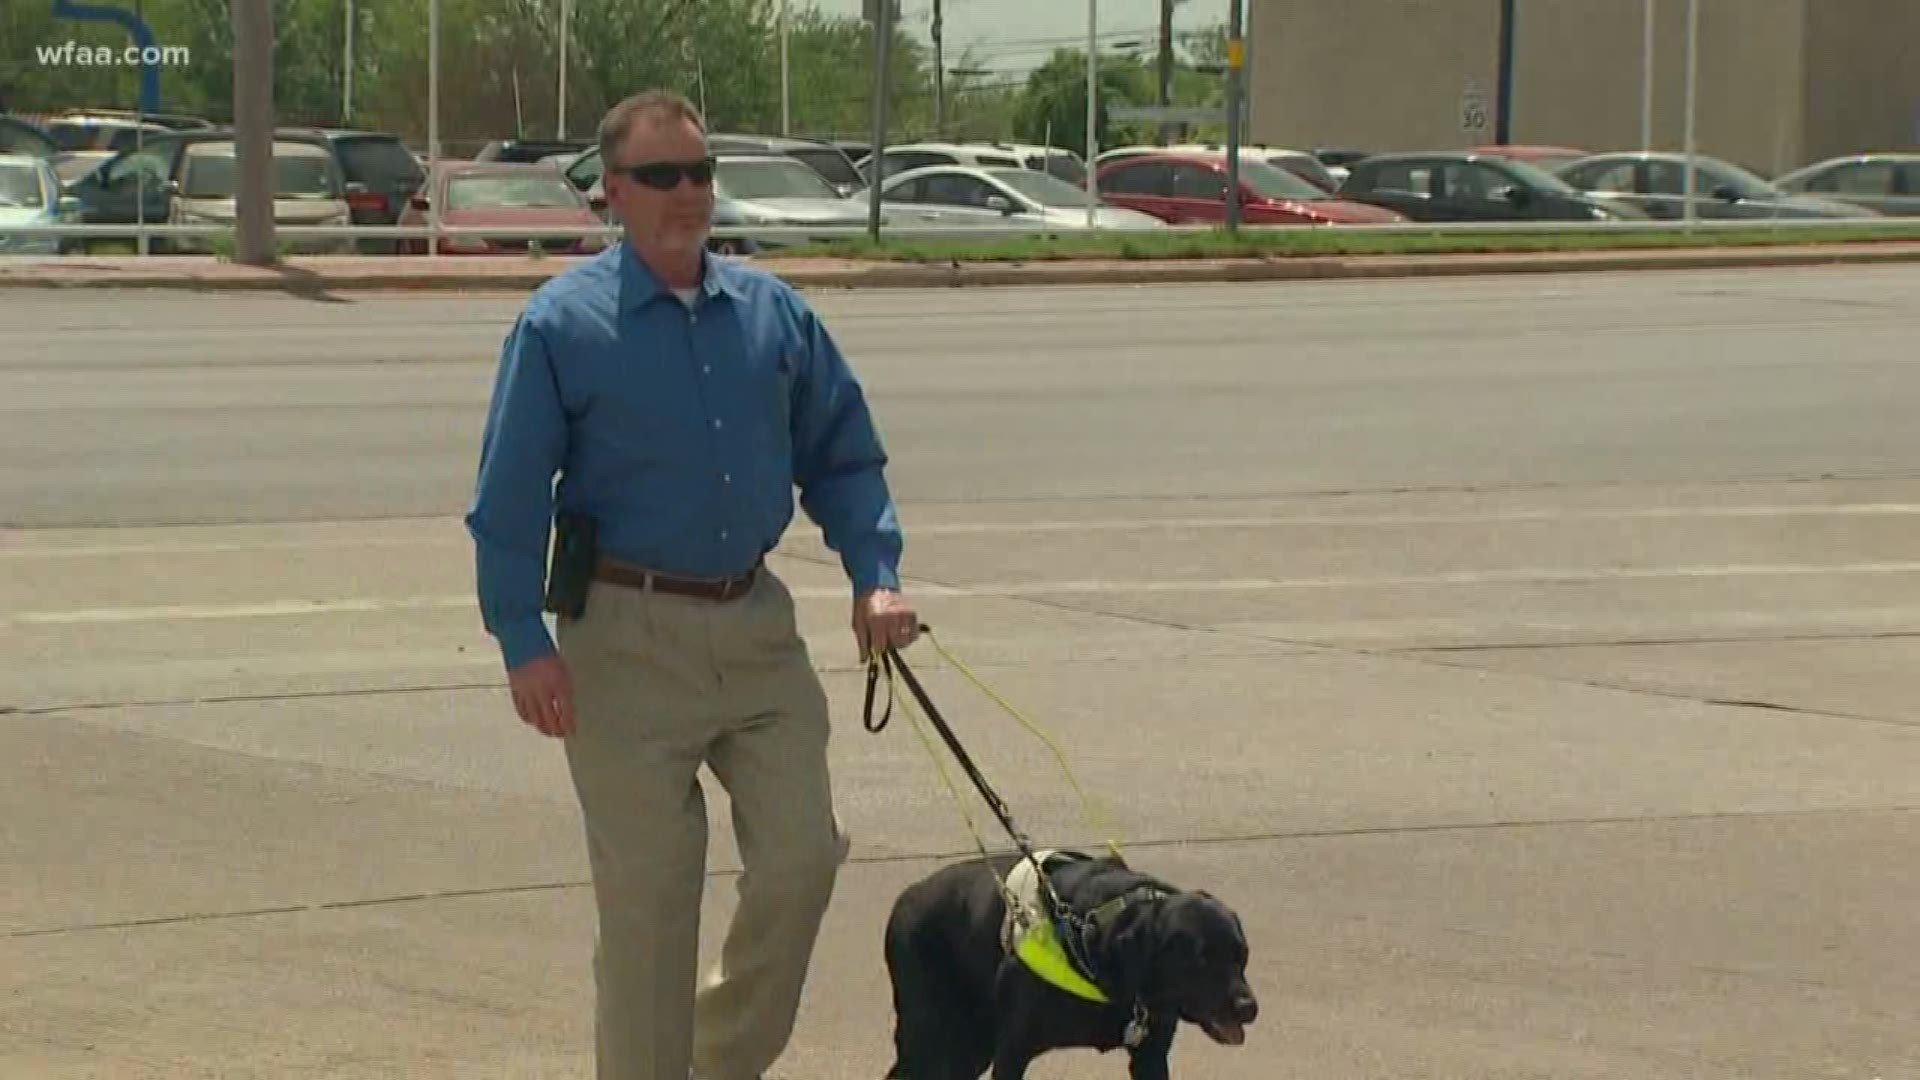 Jim Walker, 57, said he didn't think twice when he saw the officers needing help.